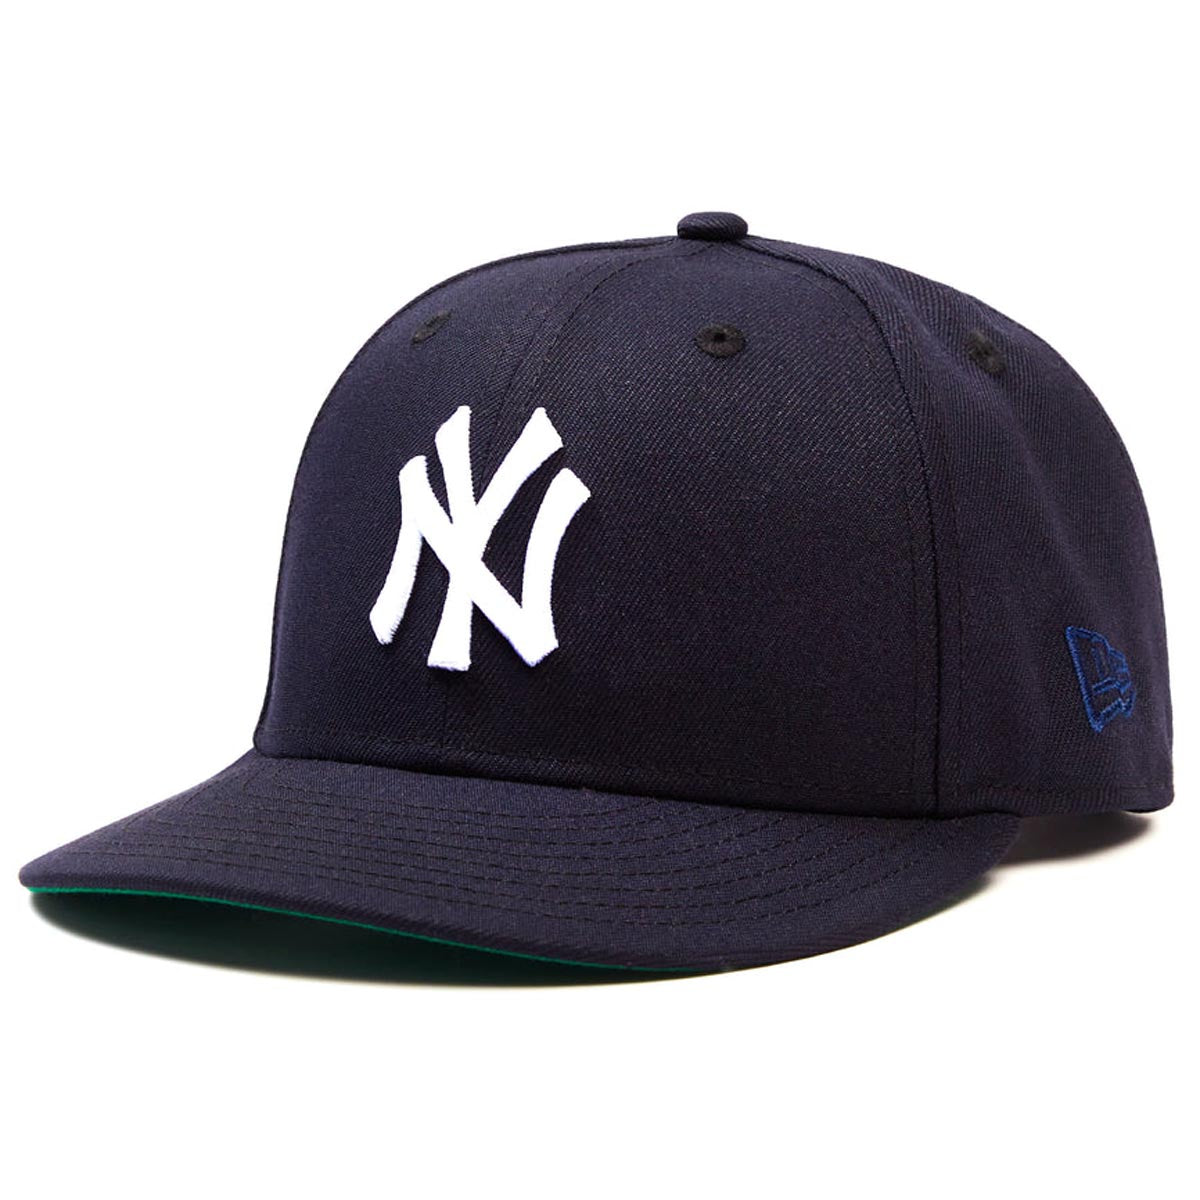 Alltimers x New Era Yankees Hat - Navy image 1